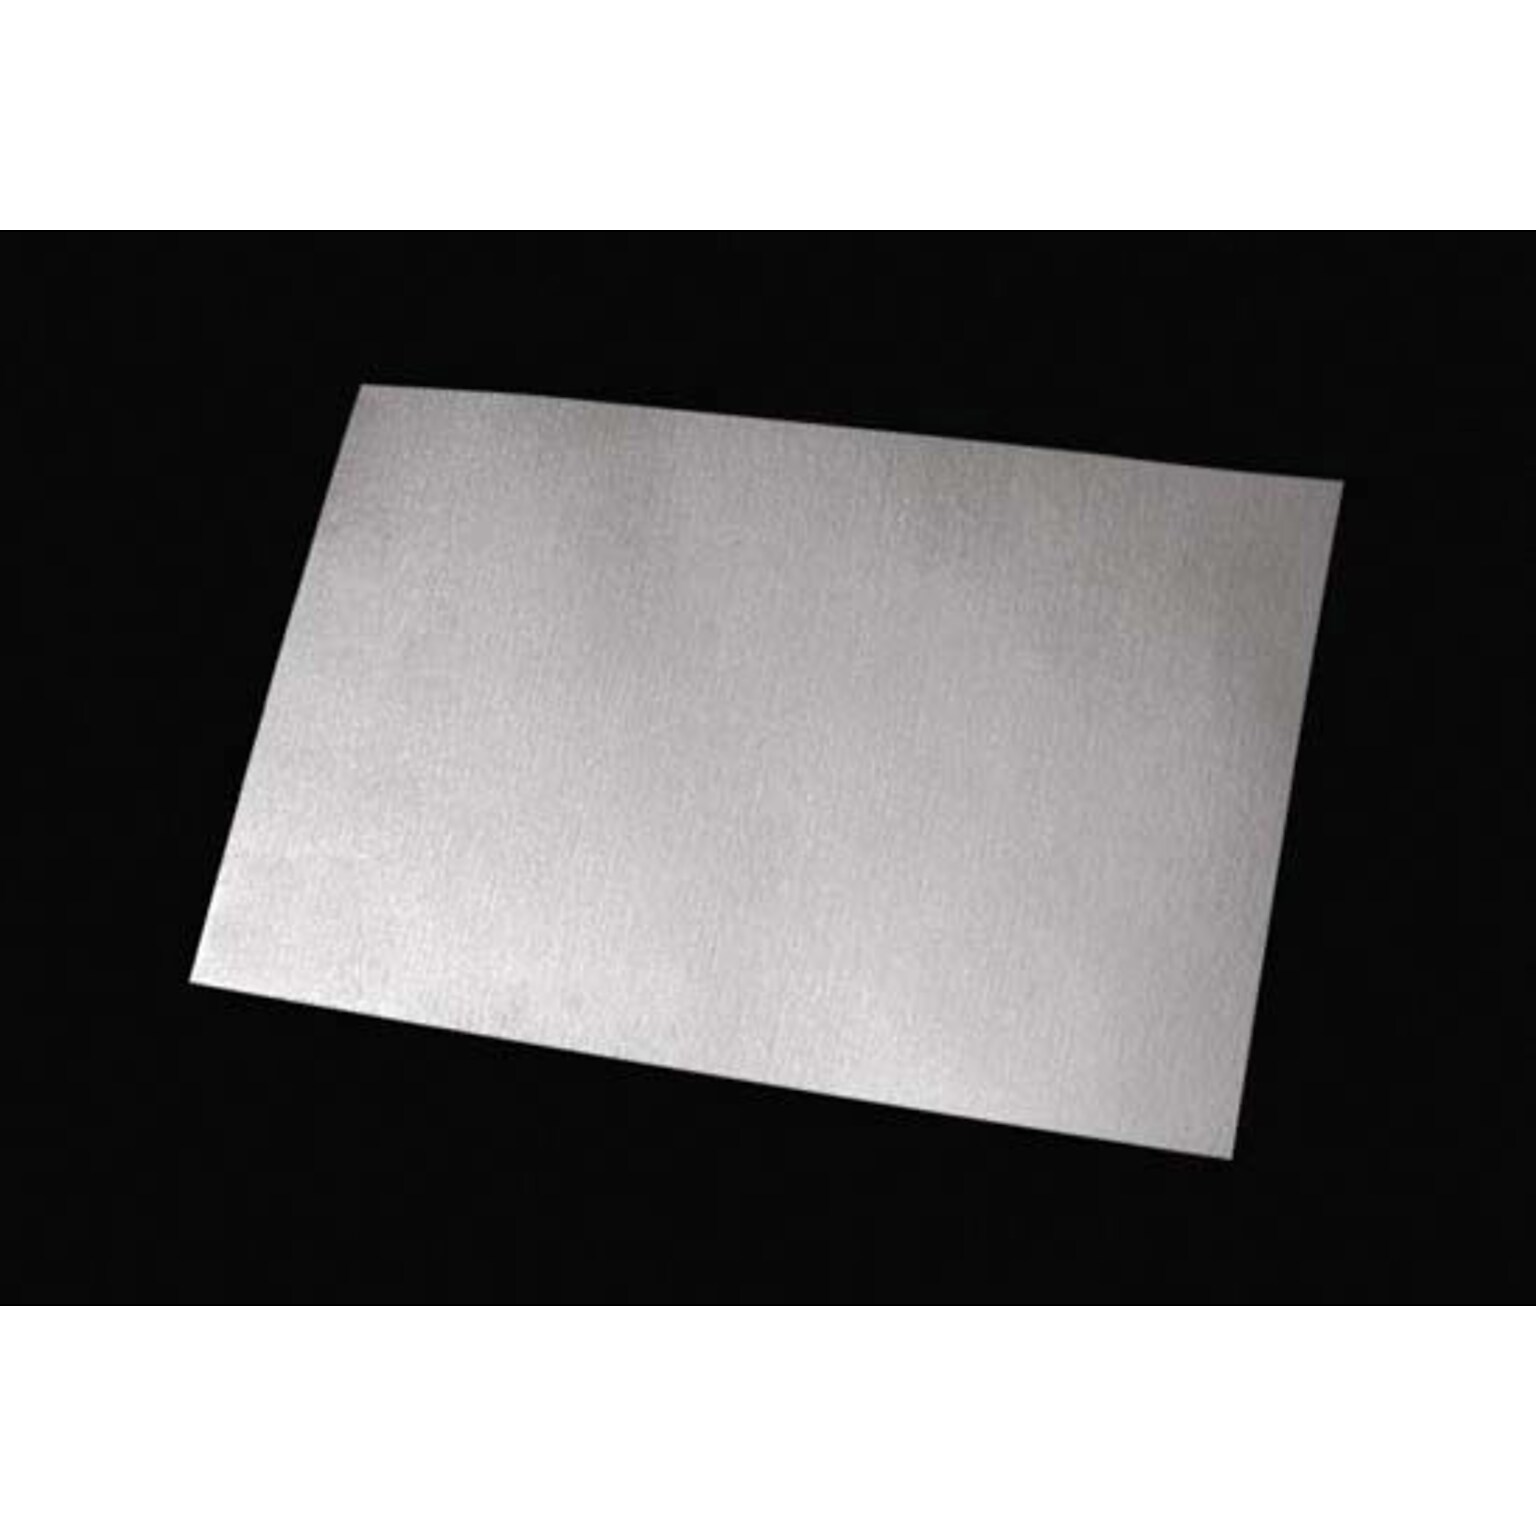 TST Impreso Thermal Printhead Cleaning Card EZ. 25/Carton (2394)